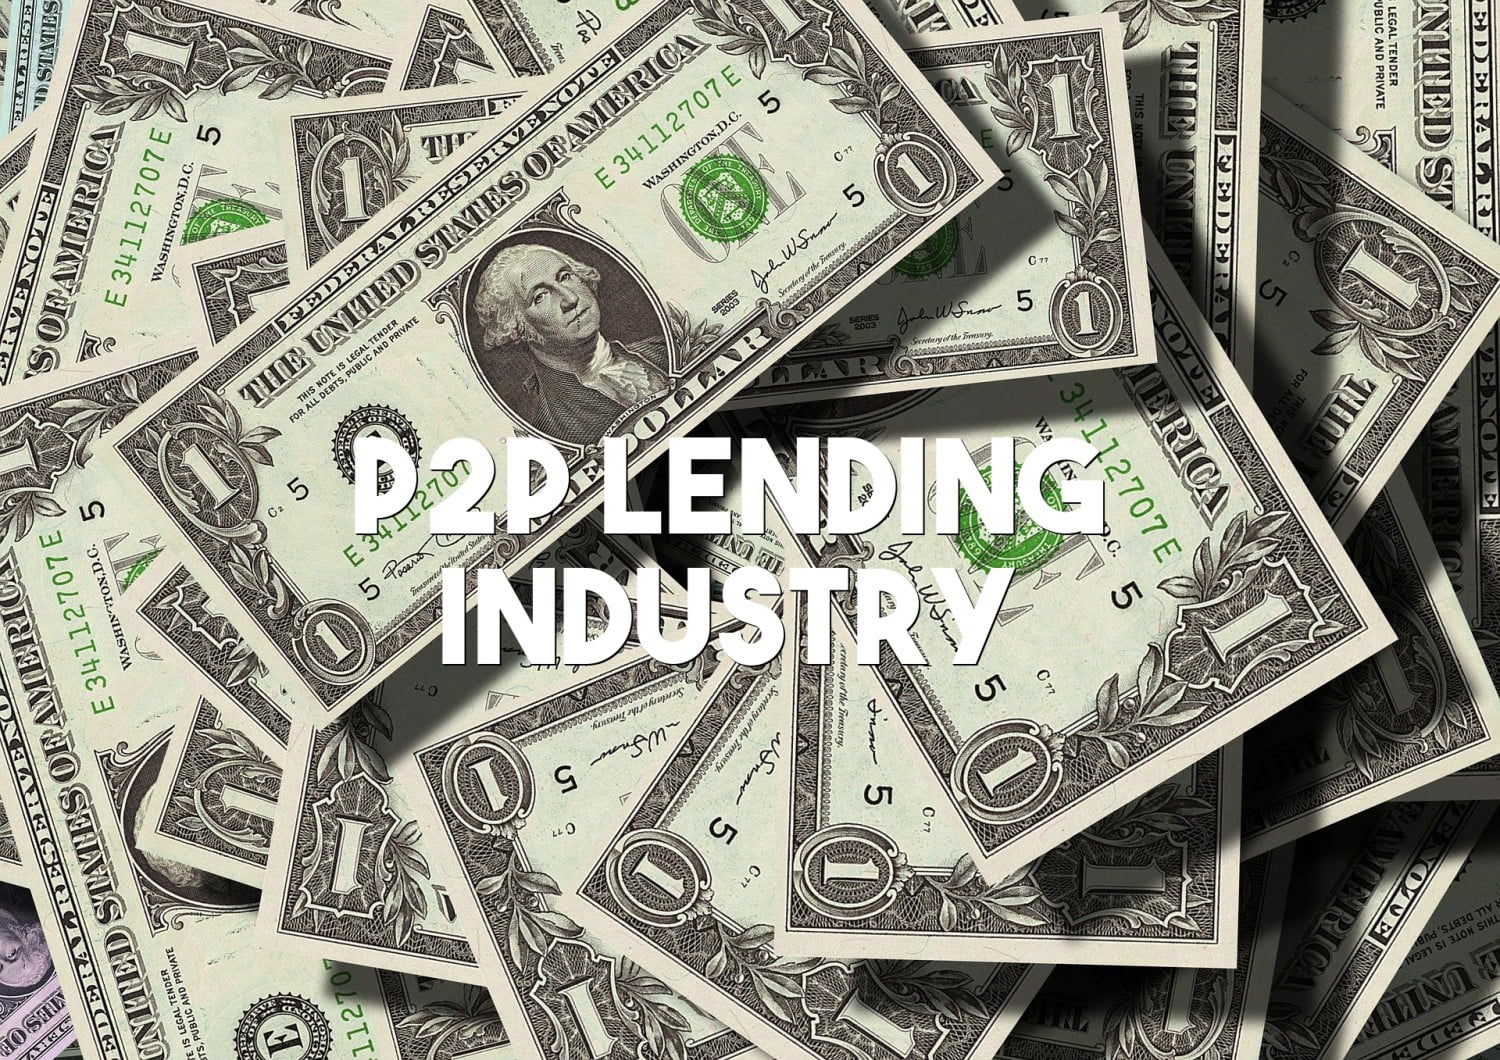 p2p lending industry